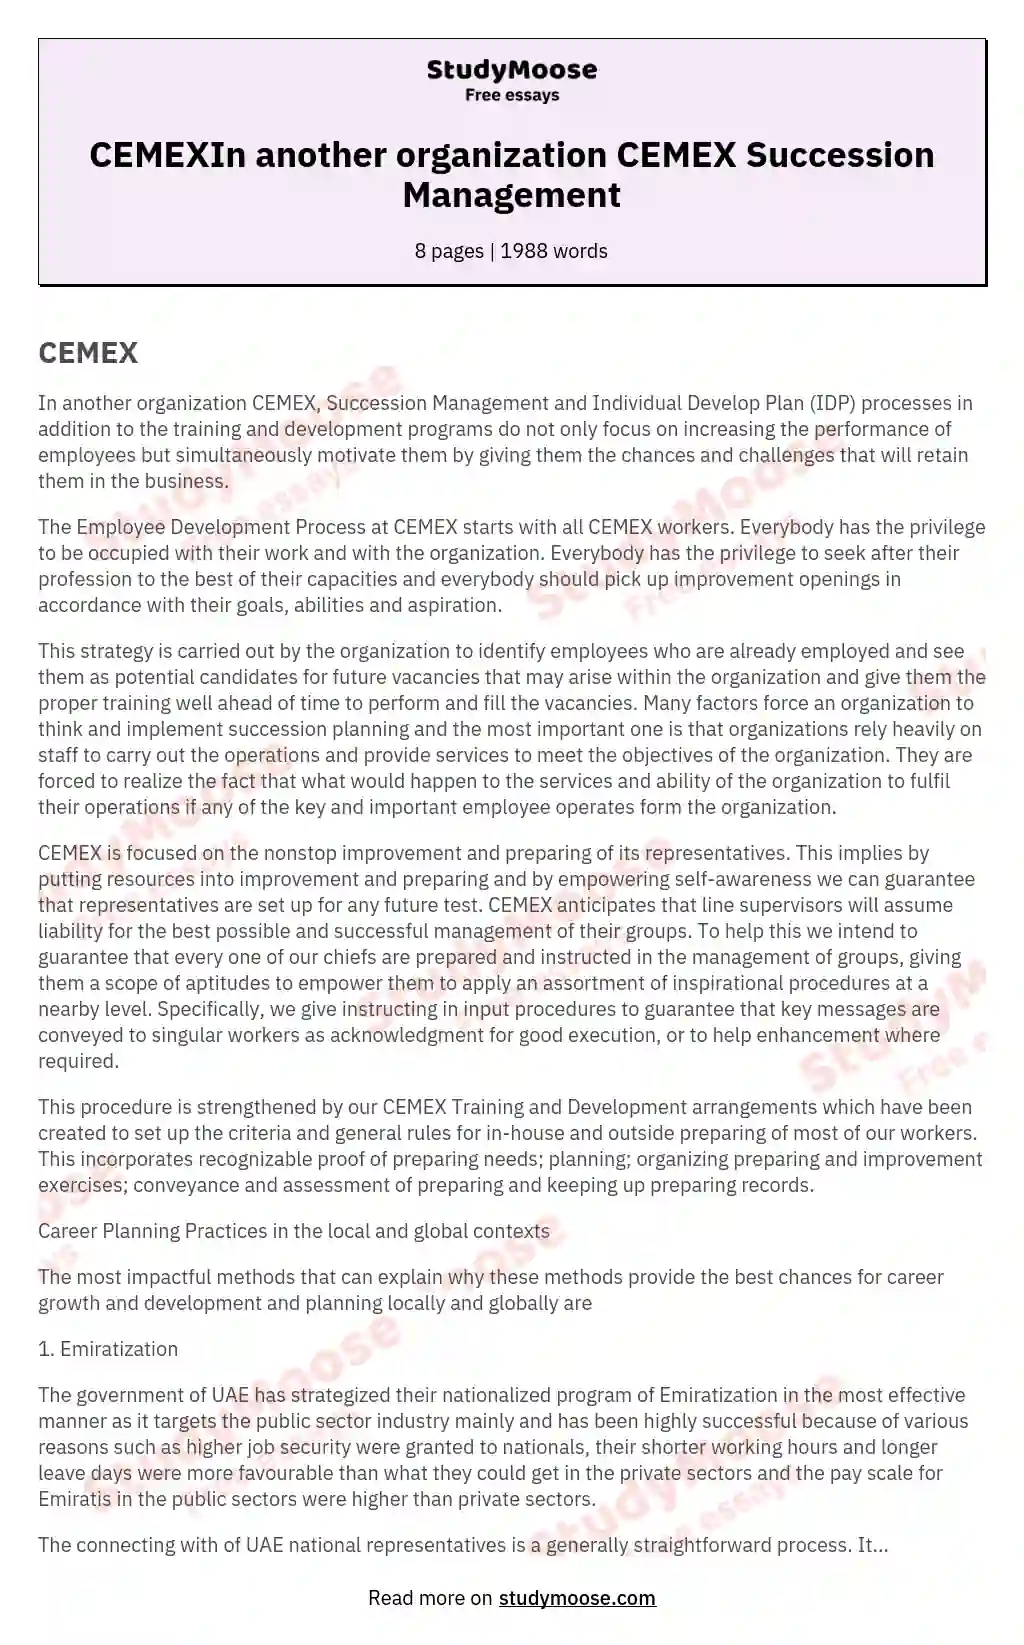 CEMEXIn another organization CEMEX Succession Management essay